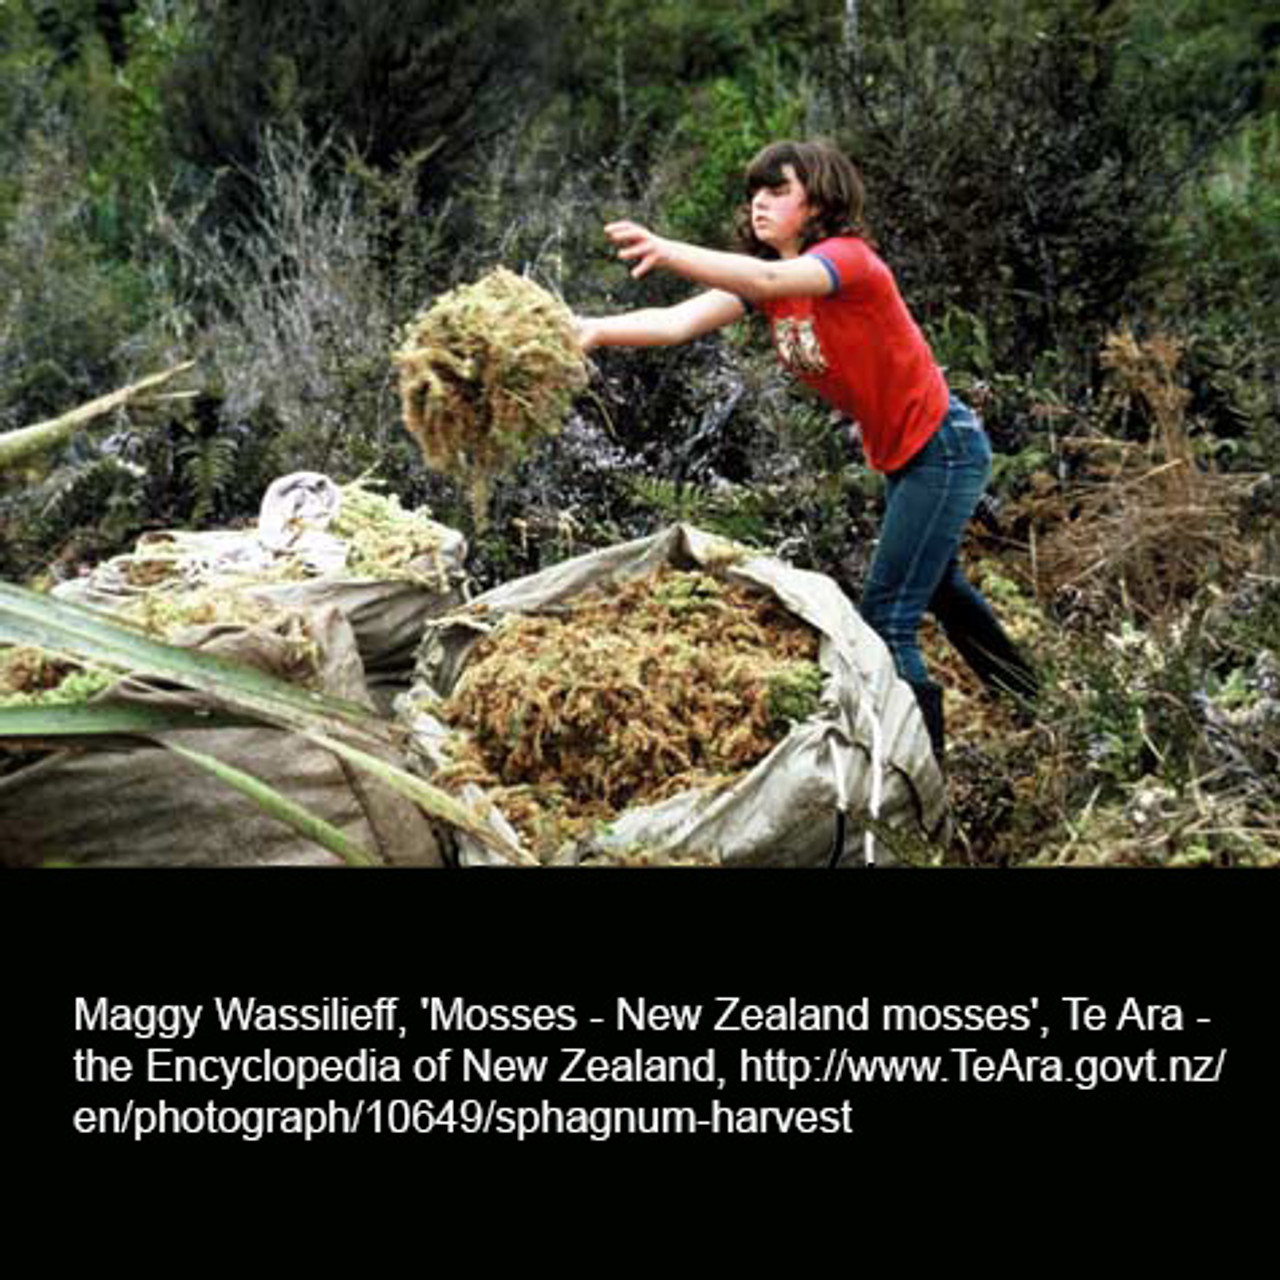 Spagmoss Premium New Zealand Sphagnum Moss AA Grade (100 Gram) 